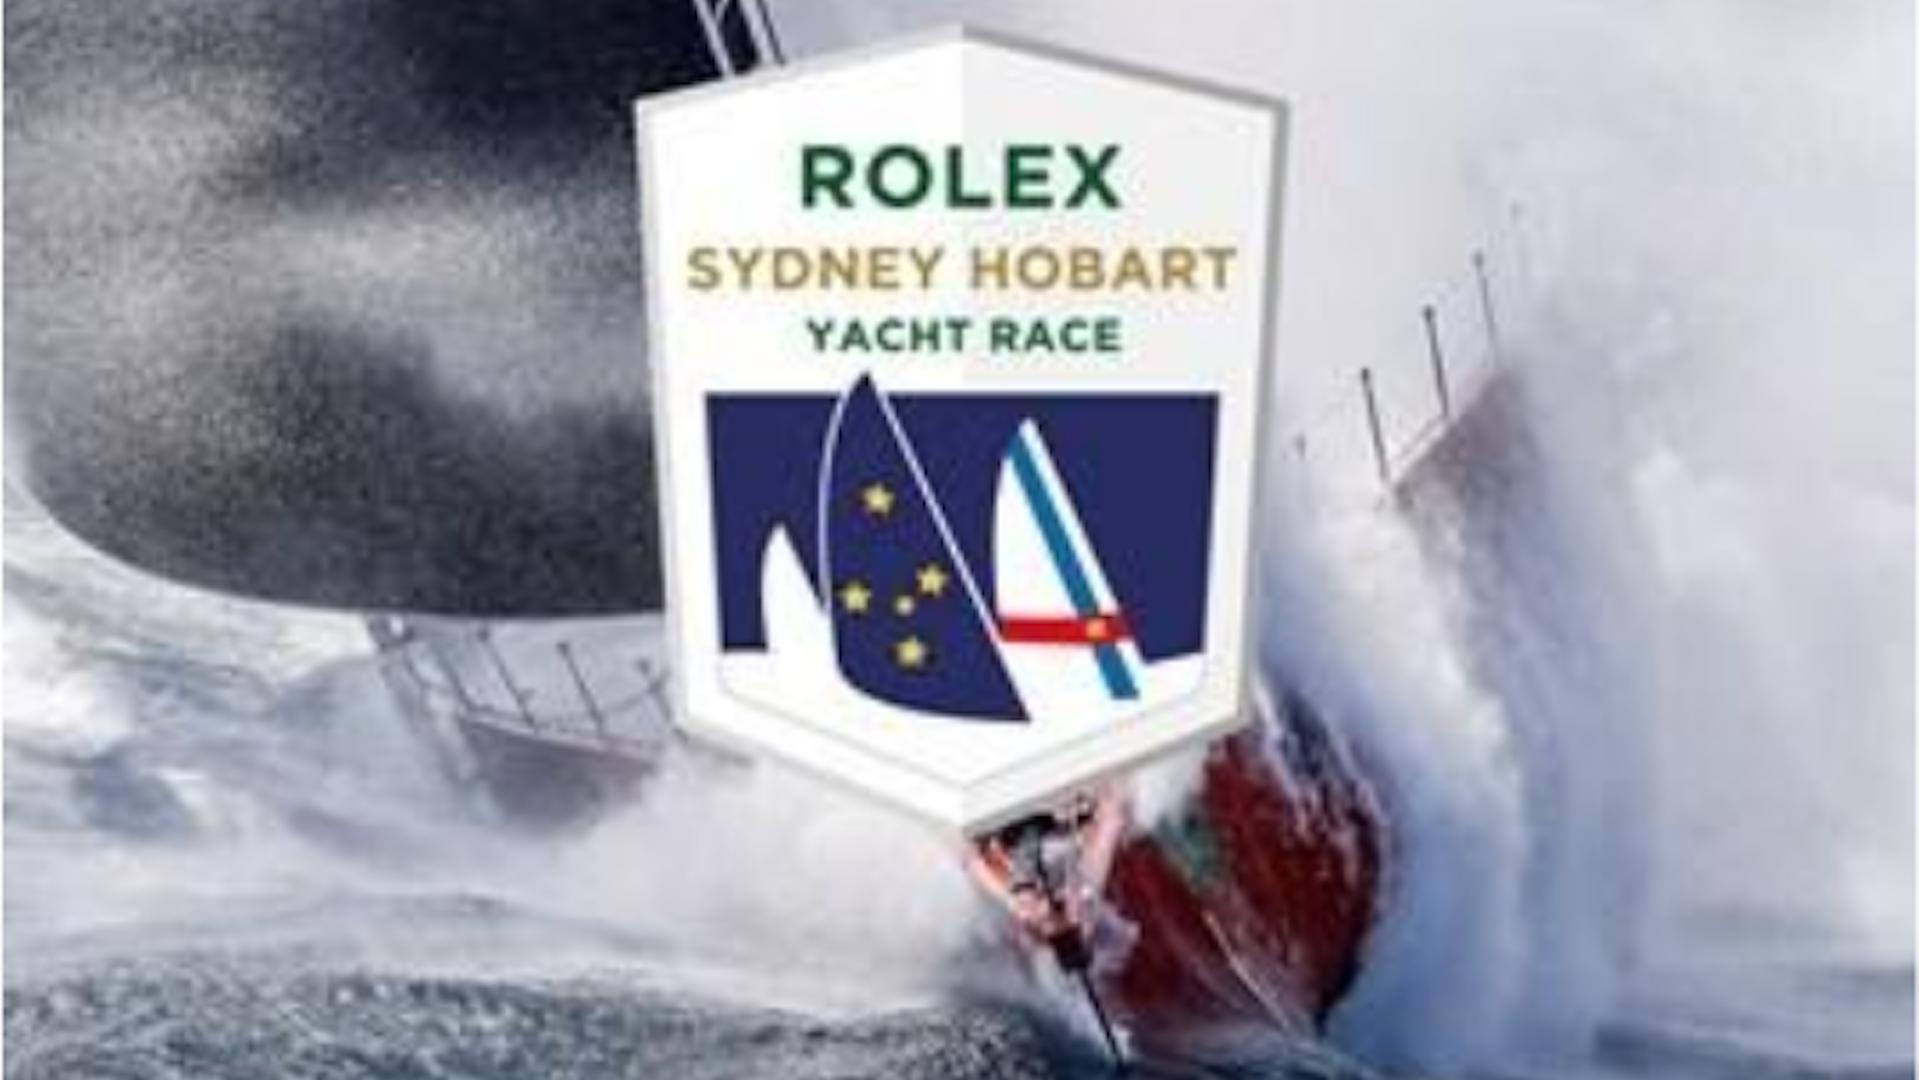 Rolex Sydney Hobart Yacht Race Start Boxing Day